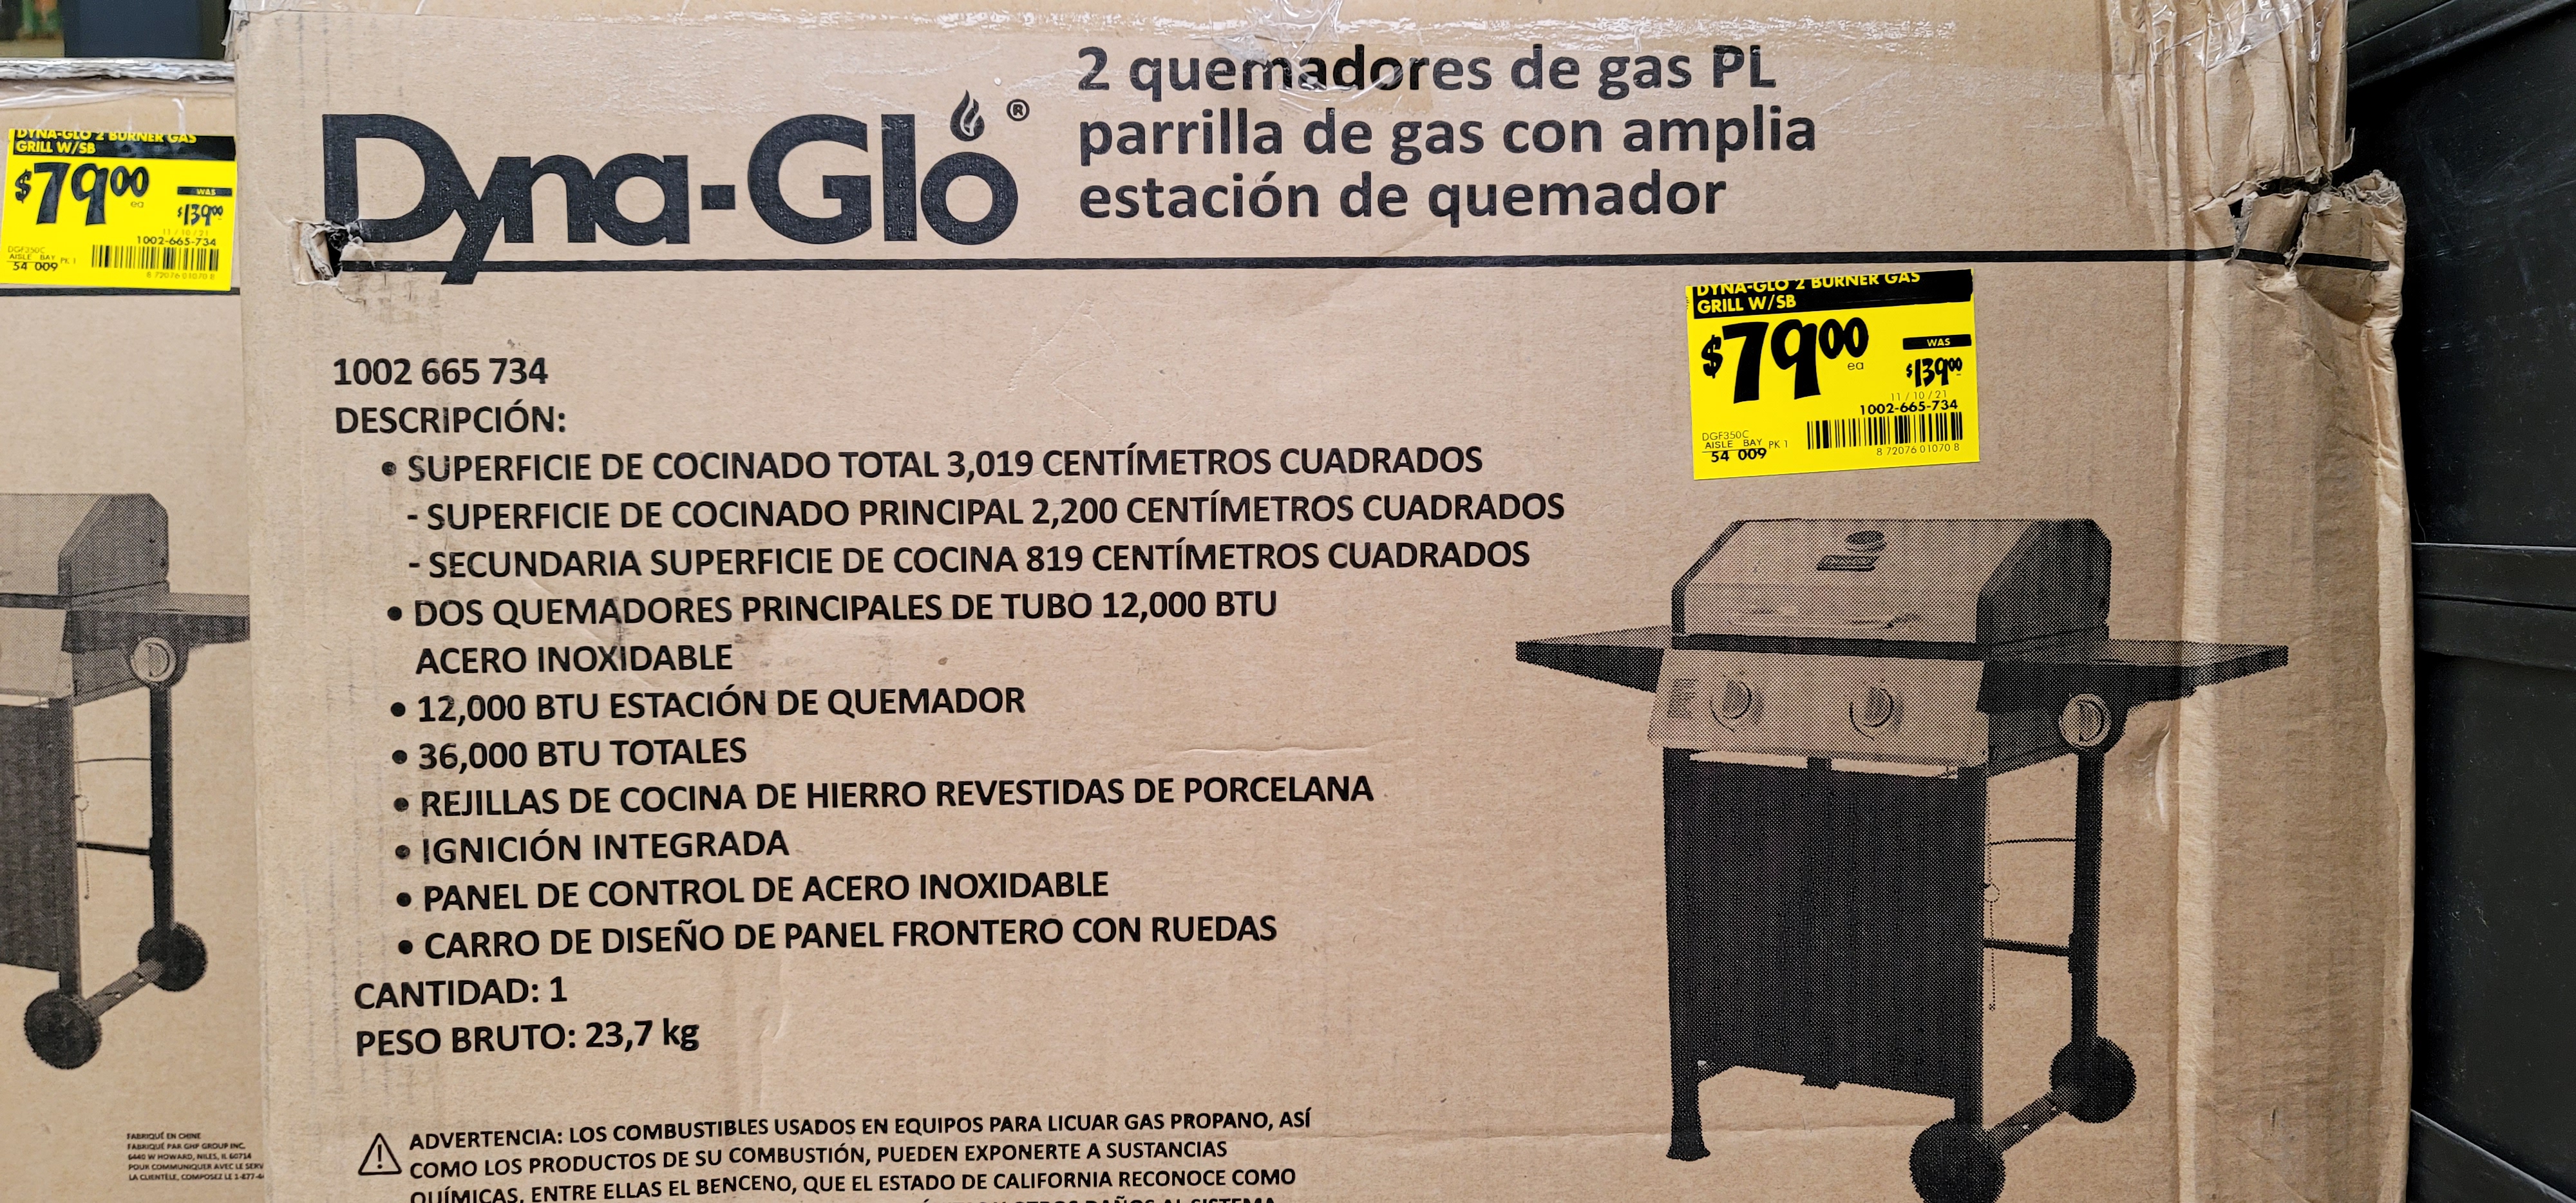 Dyna-Glo two burner grill Home Depot -YMMV $79